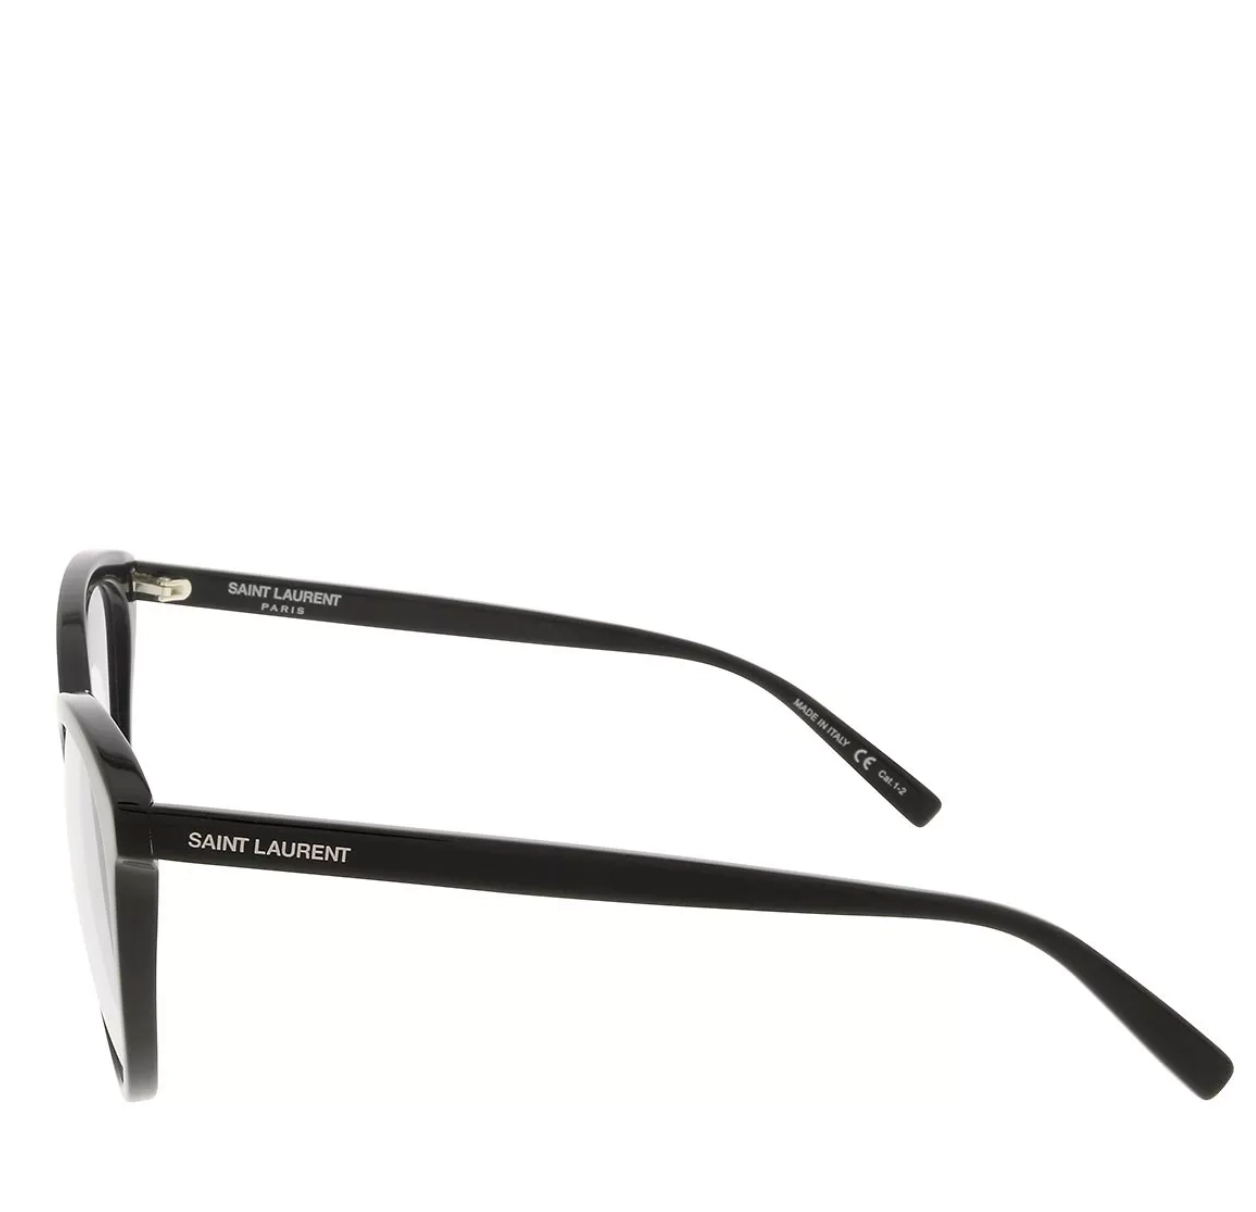 Yves Saint Laurent SL-456-005 57mm New Sunglasses